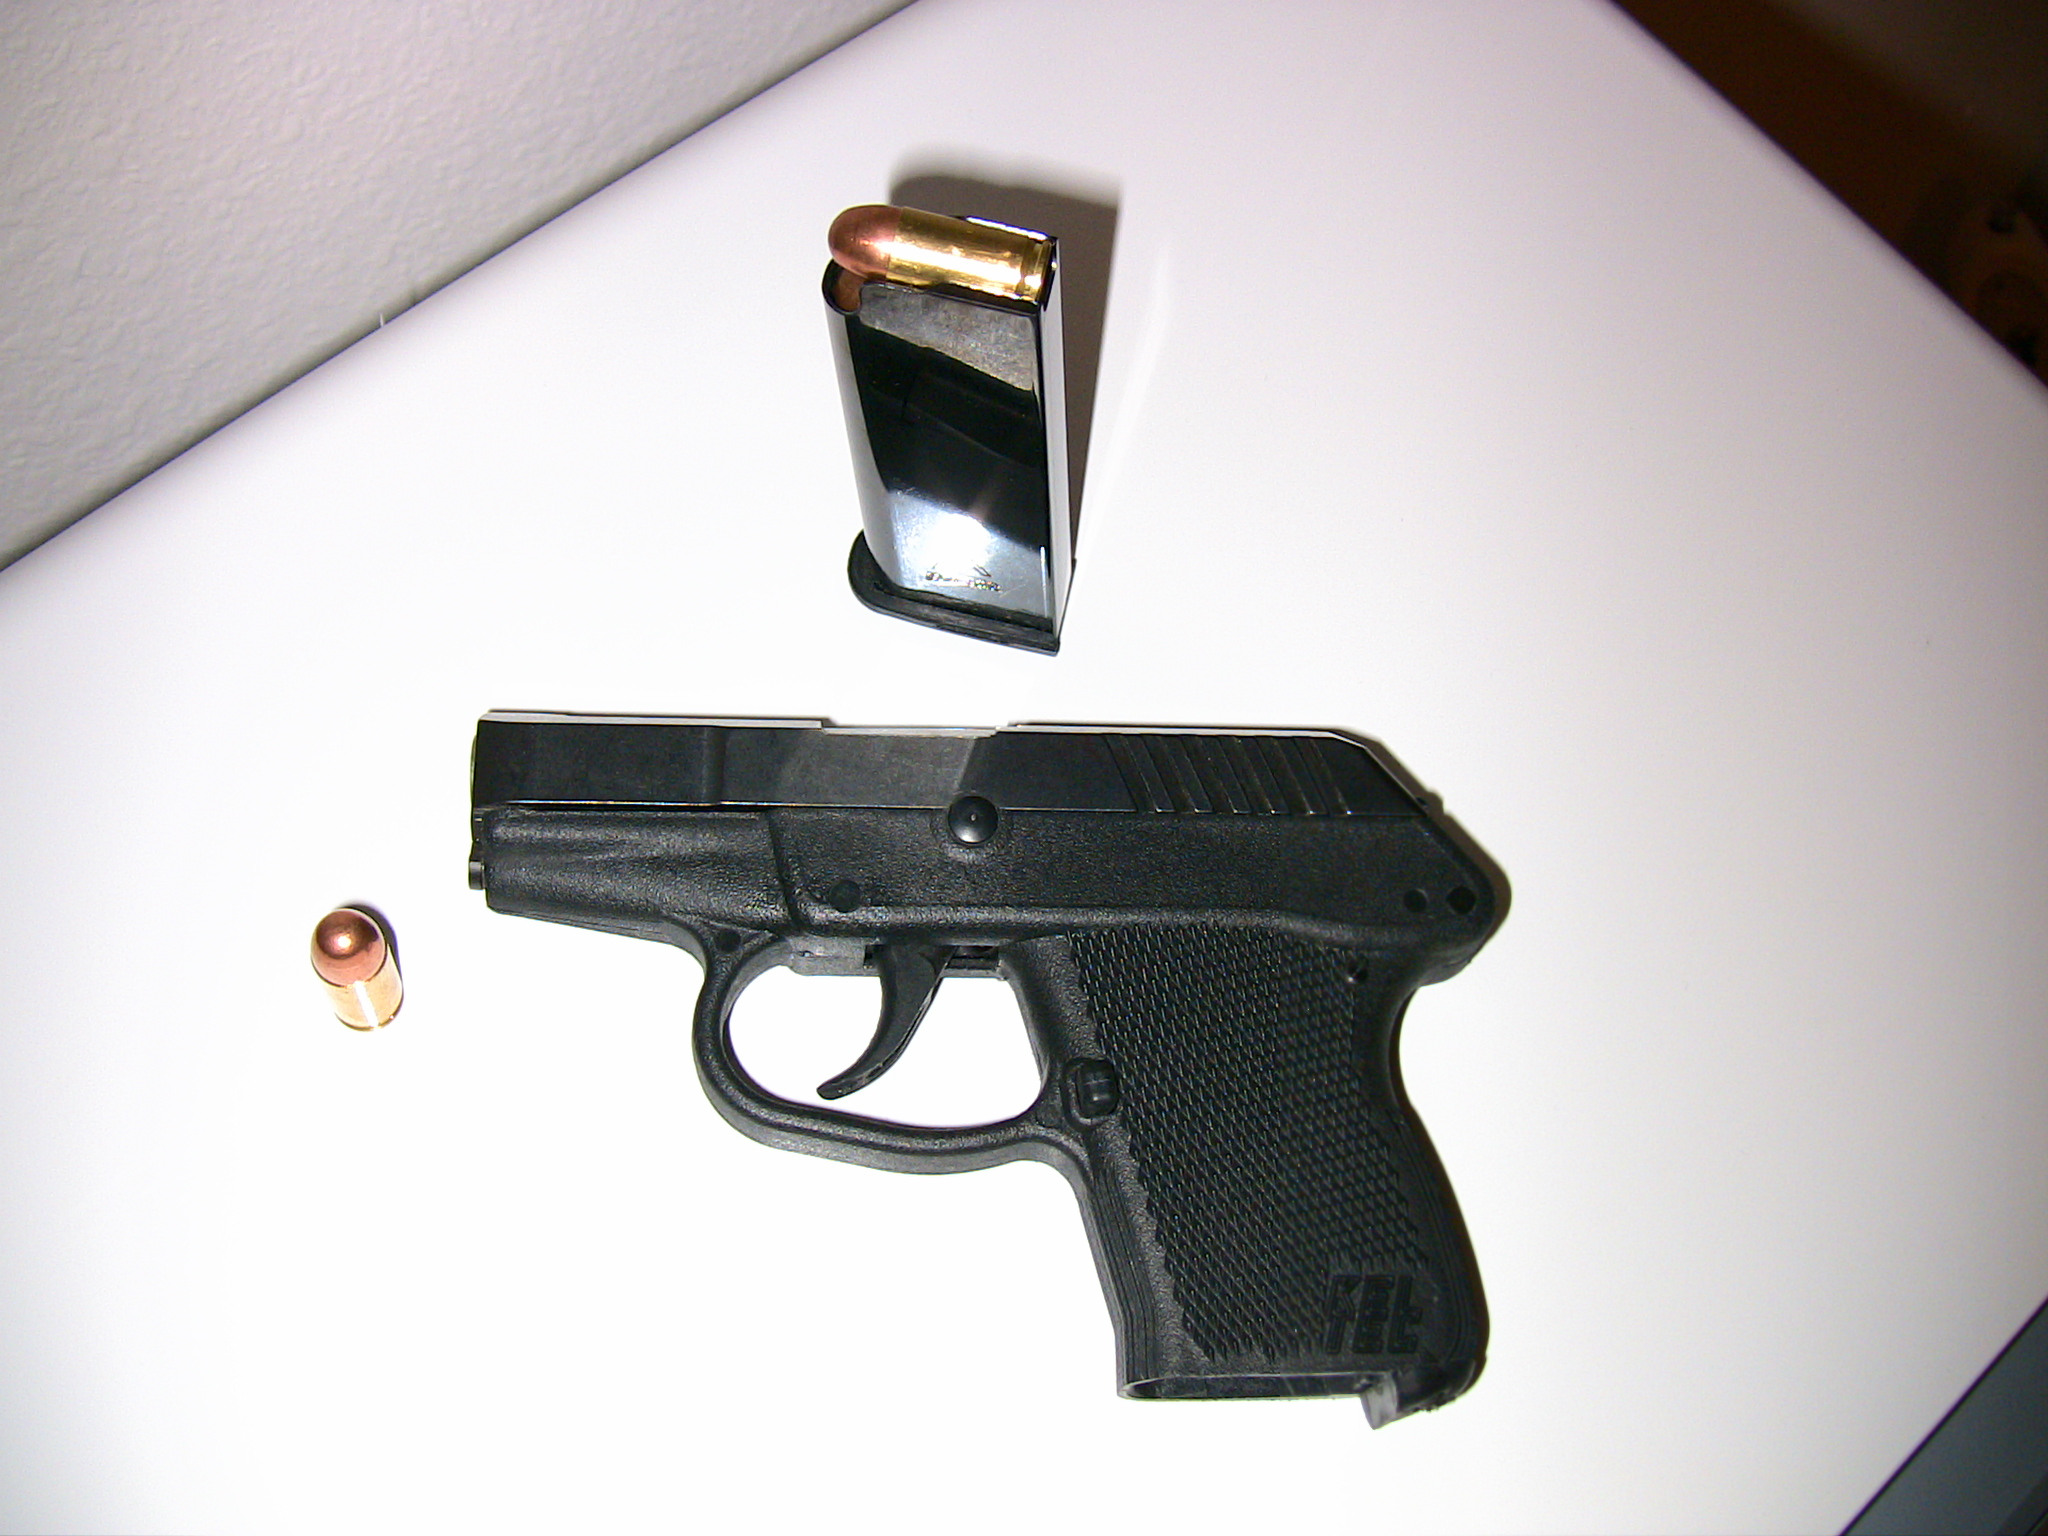 Newswrap: MD court appeals gun safety law. What happens next?